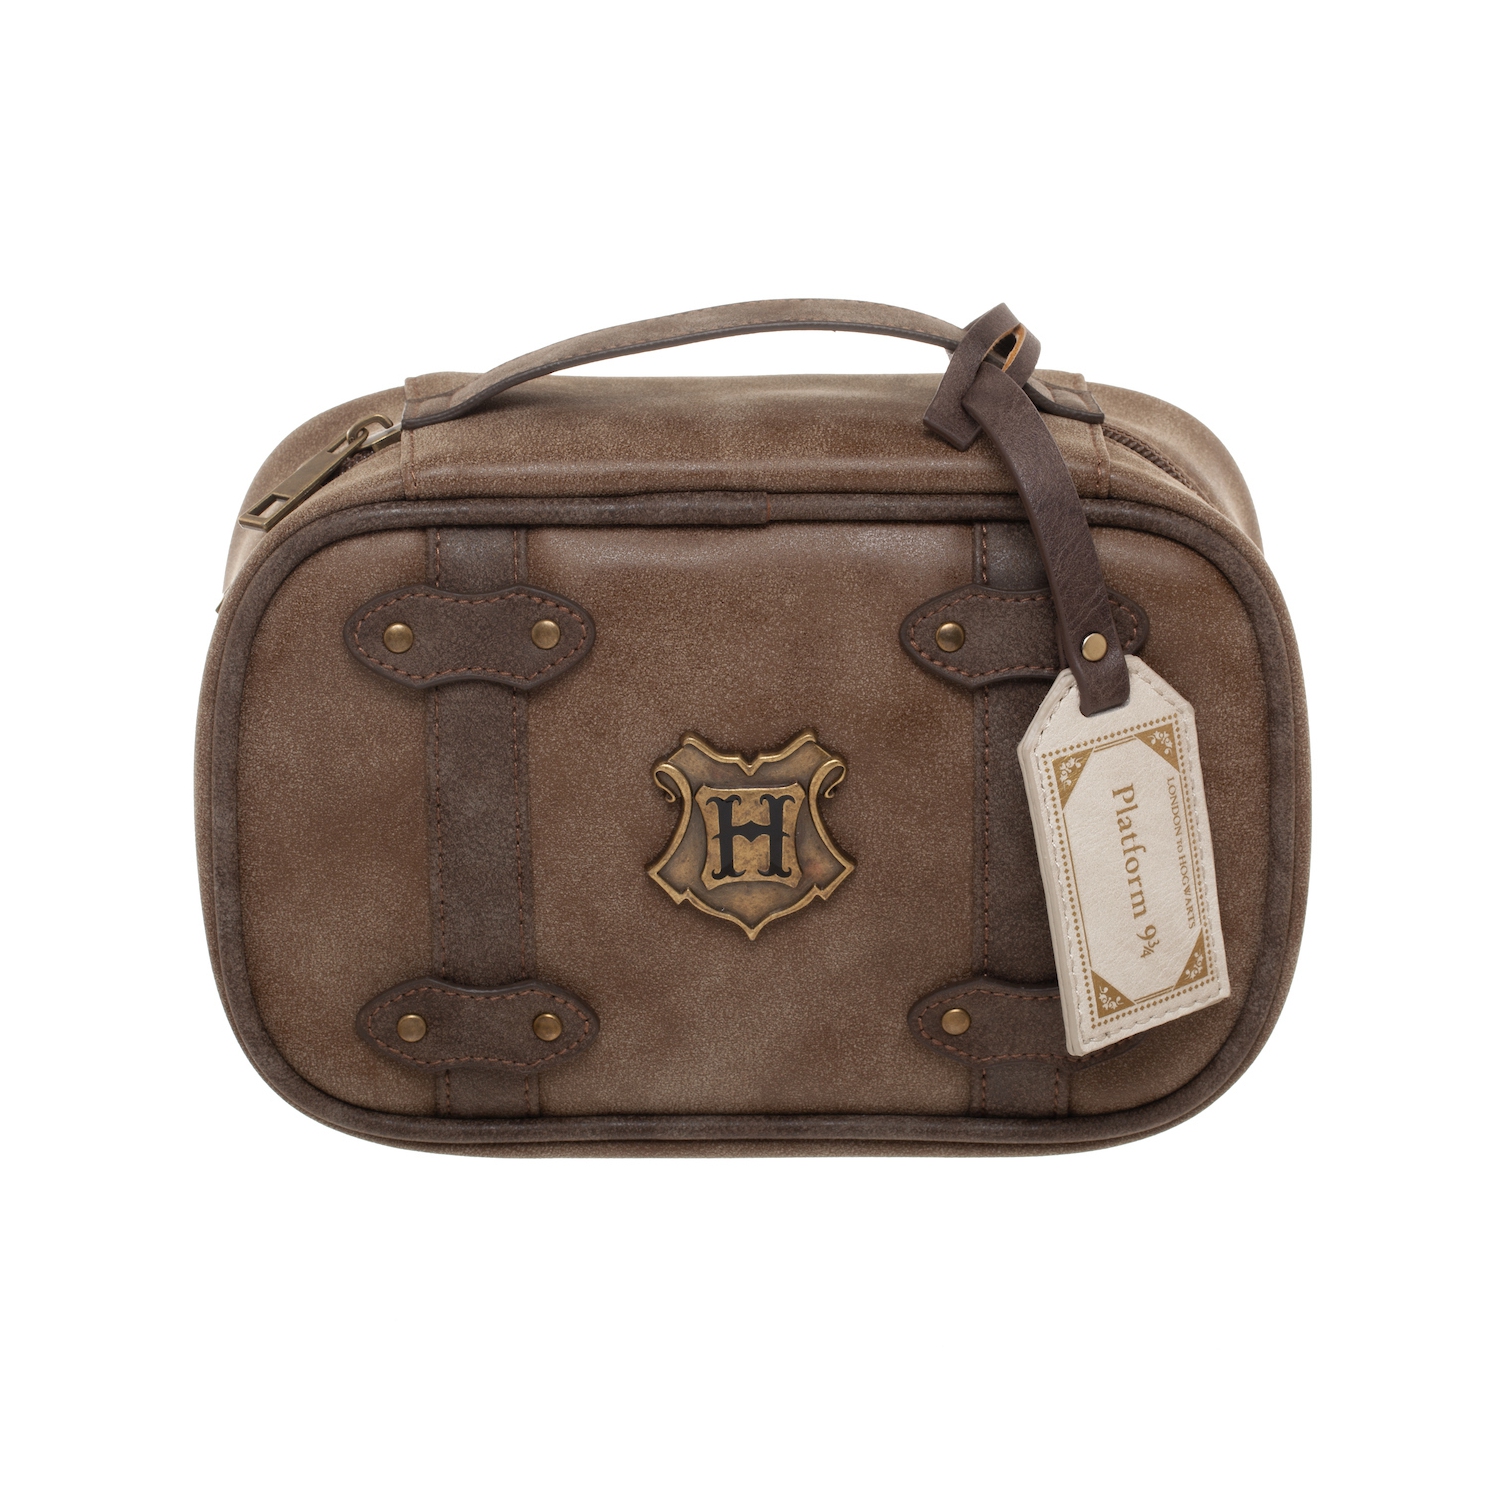 Bioworld Merchandising. Harry Potter Trunk Travel Cosmetic Bag